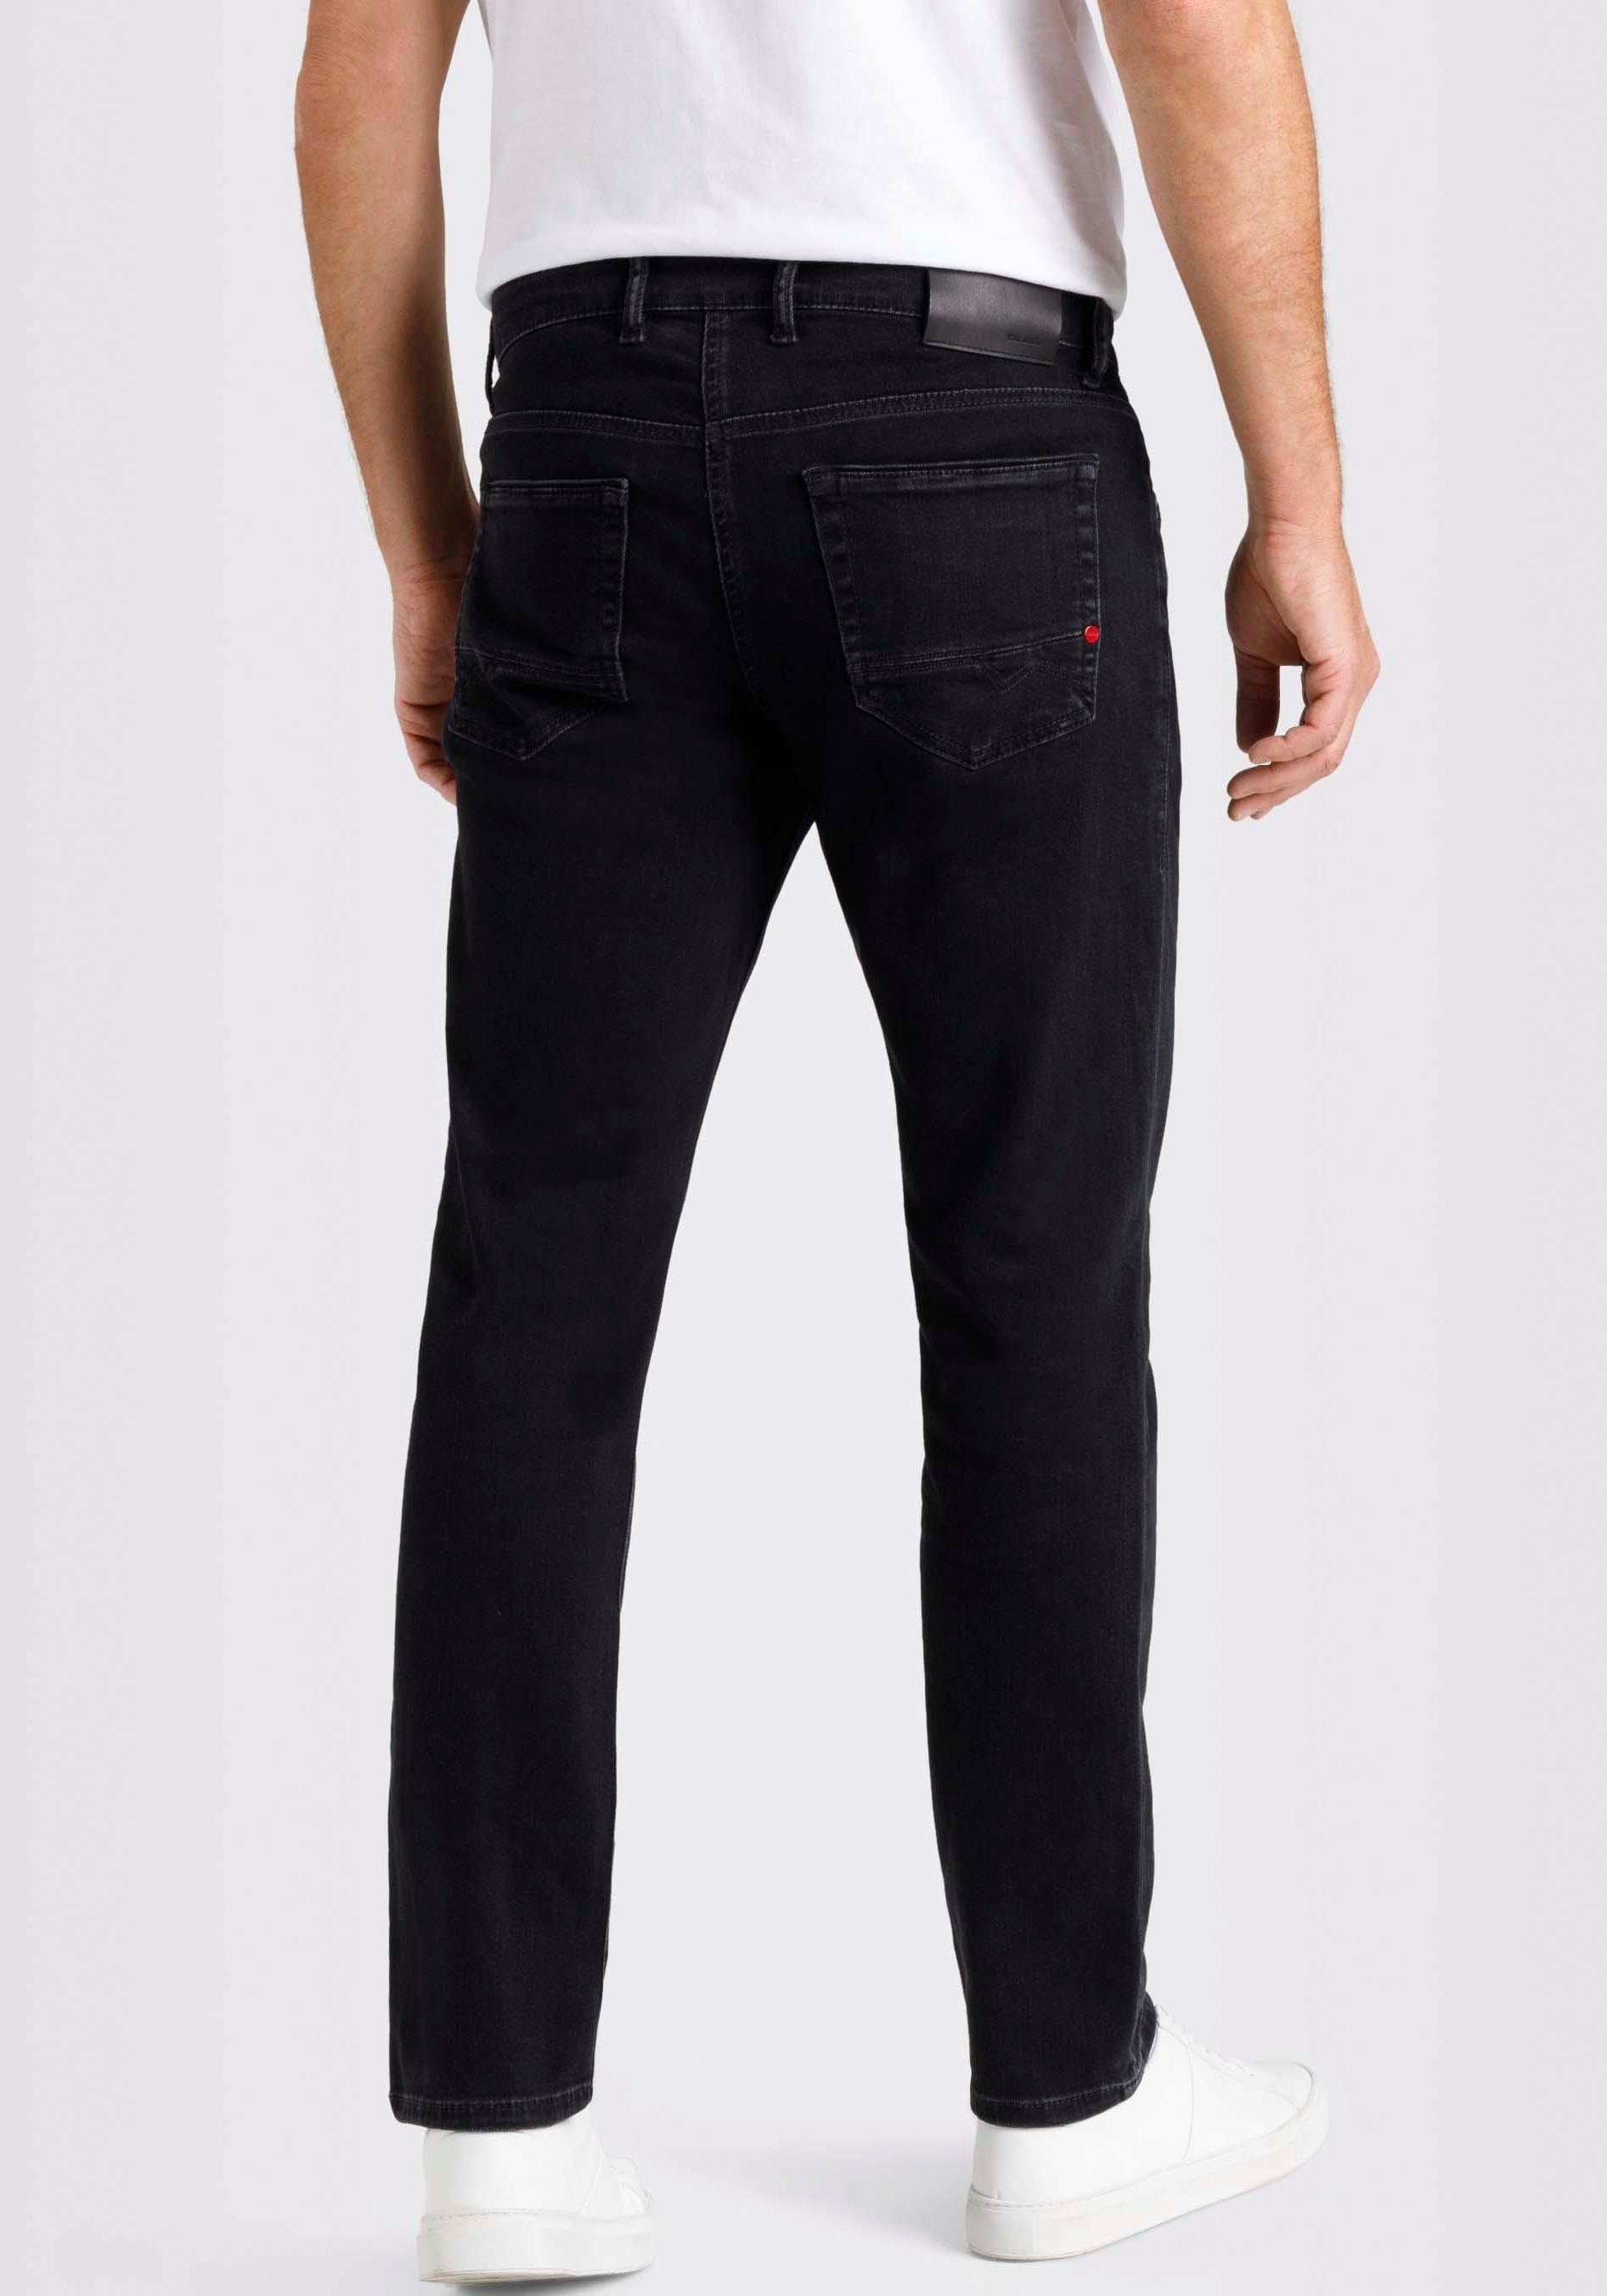 MAC Straight-Jeans Arne Pipe black wash